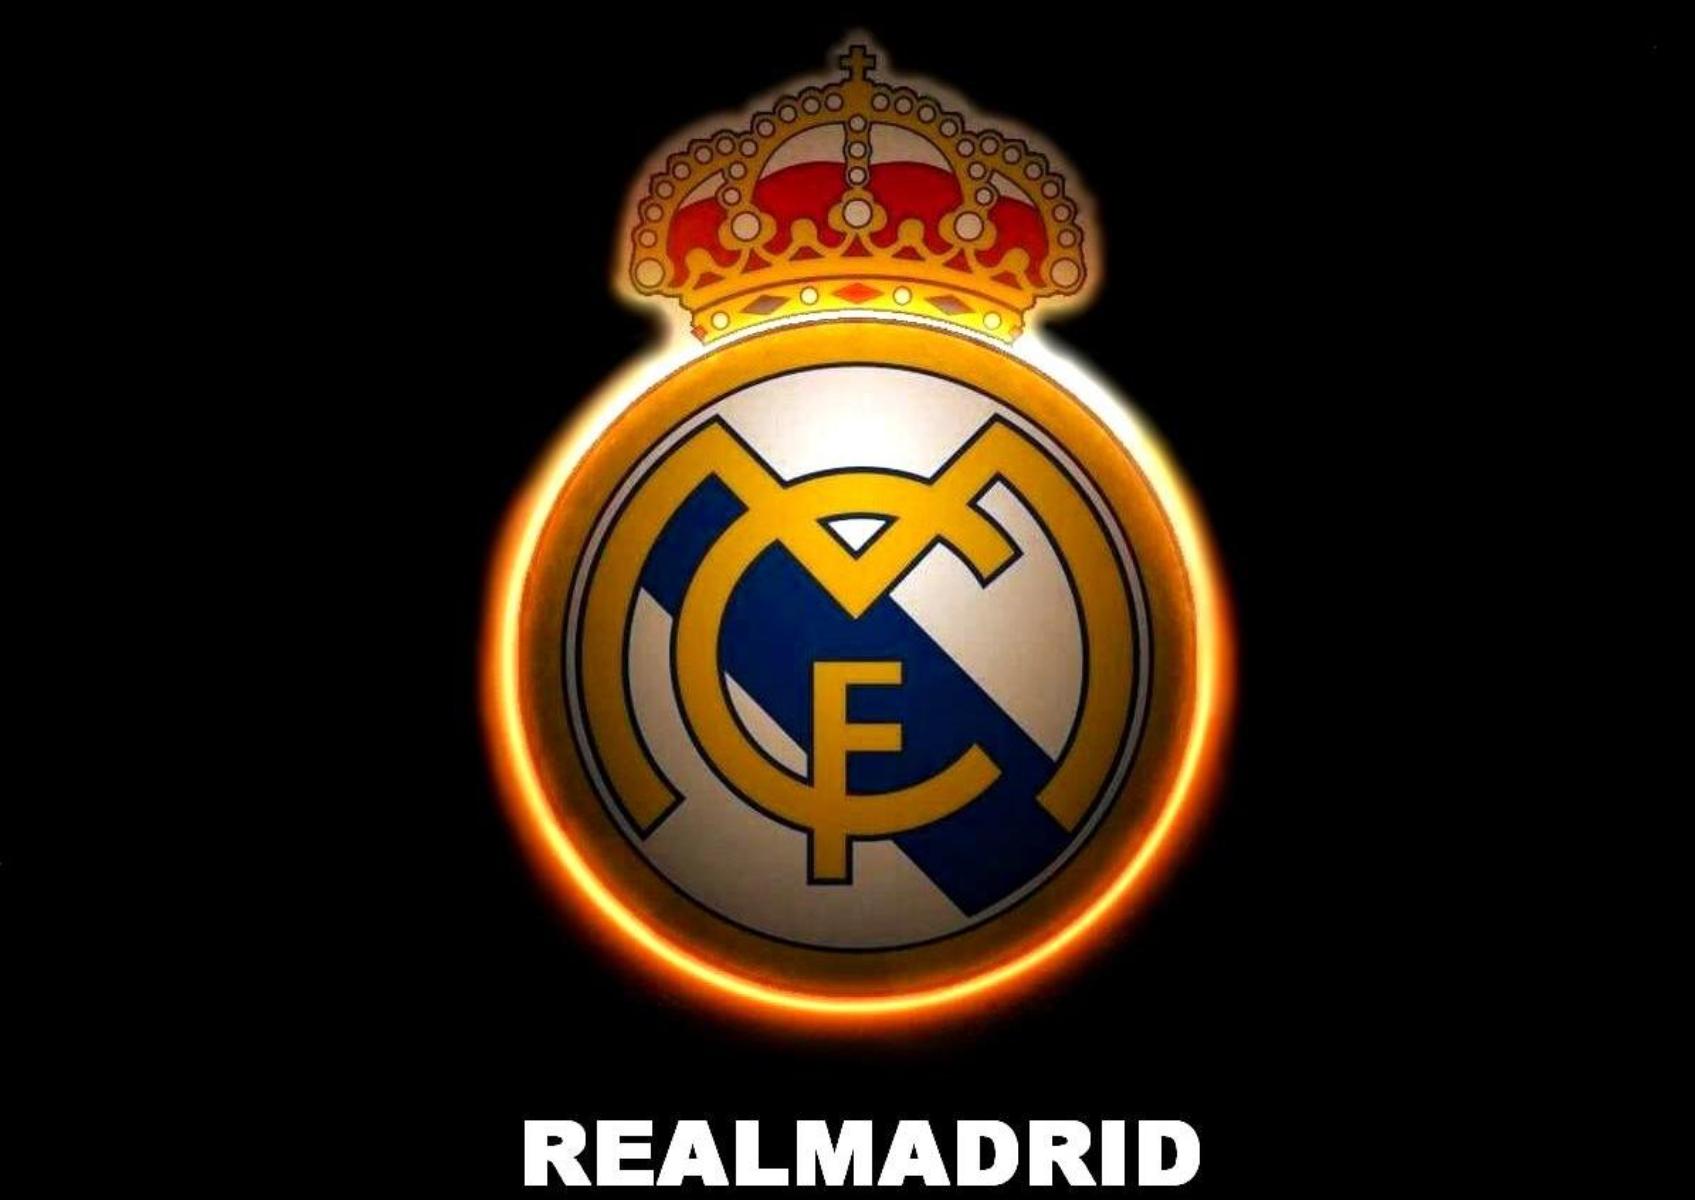 High Resolution Wallpaper | Real Madrid C.F. 1695x1200 px